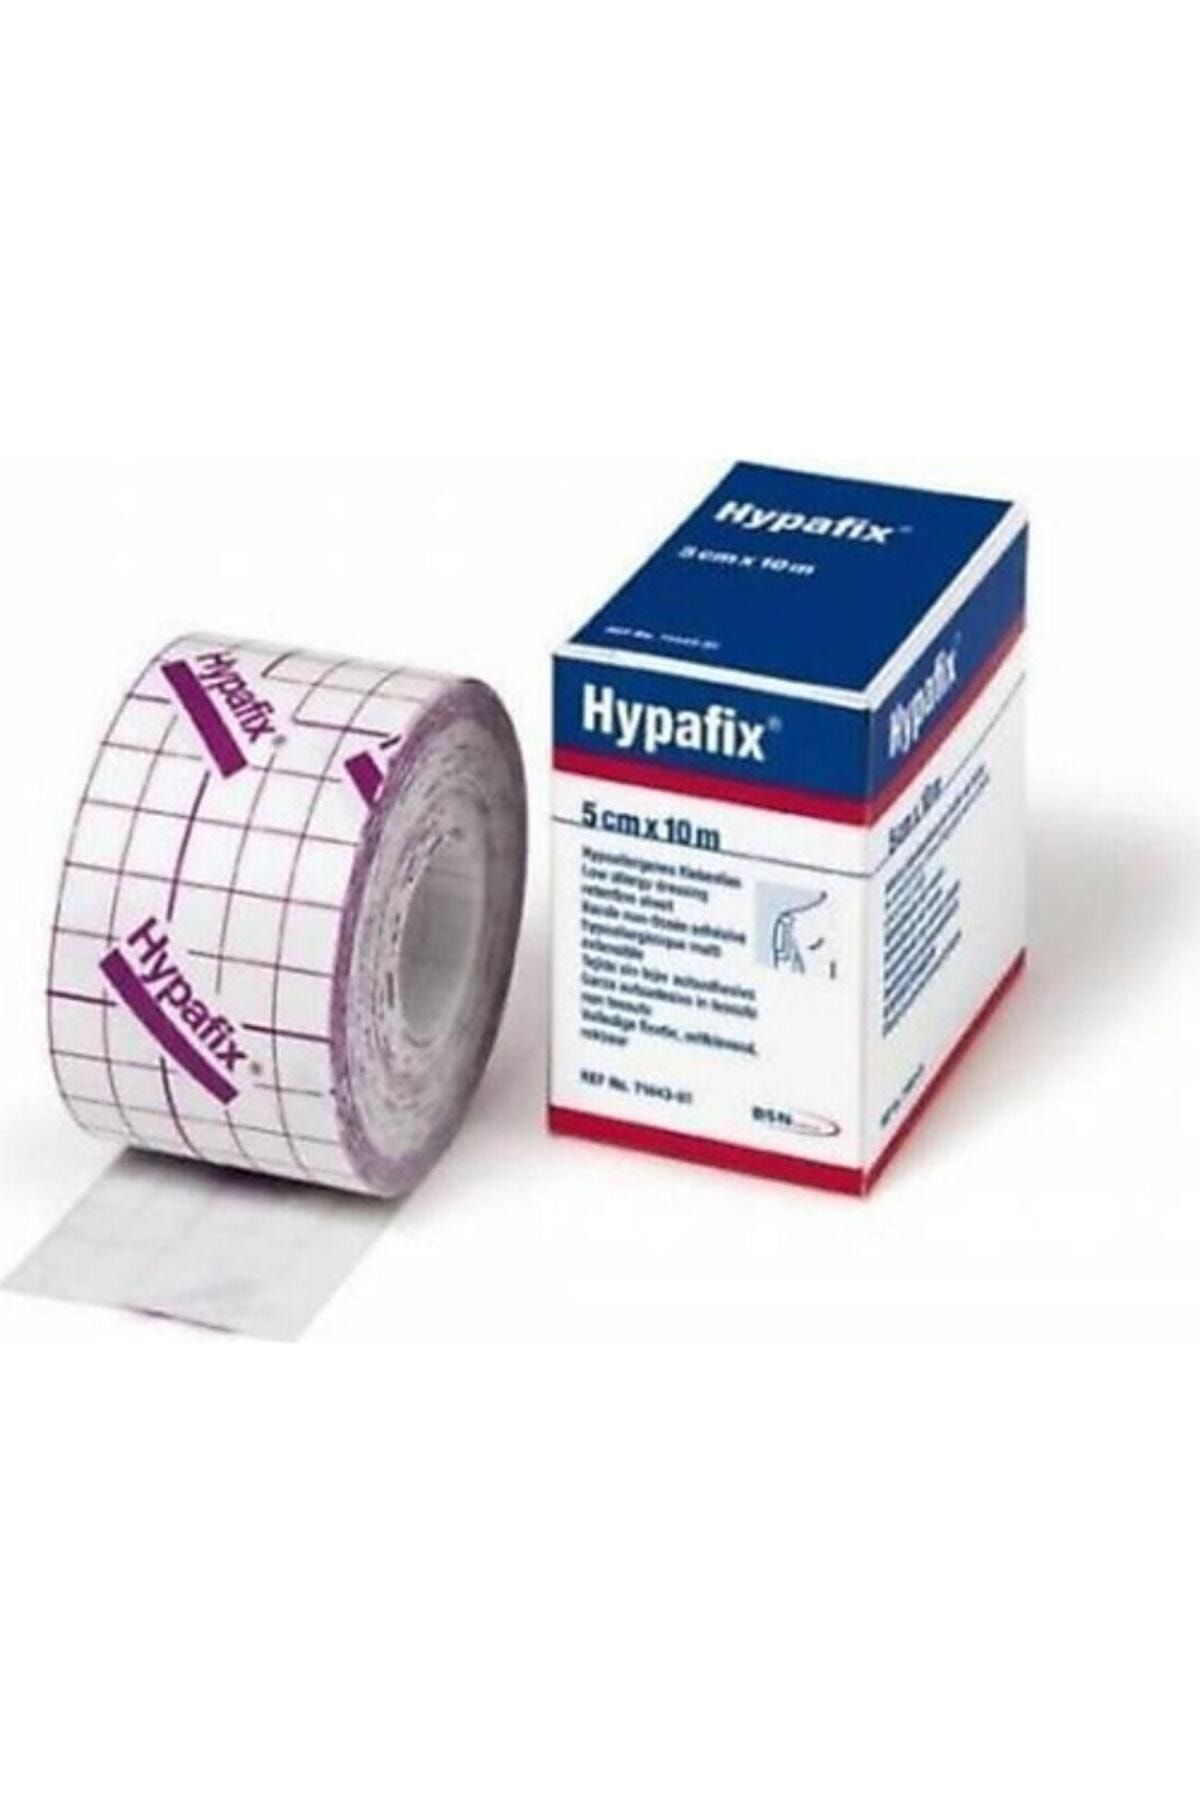 HYPAFIX HYPAFİX - FLASTER 5CM X 10M REF: 7144301 - 3 PAKET